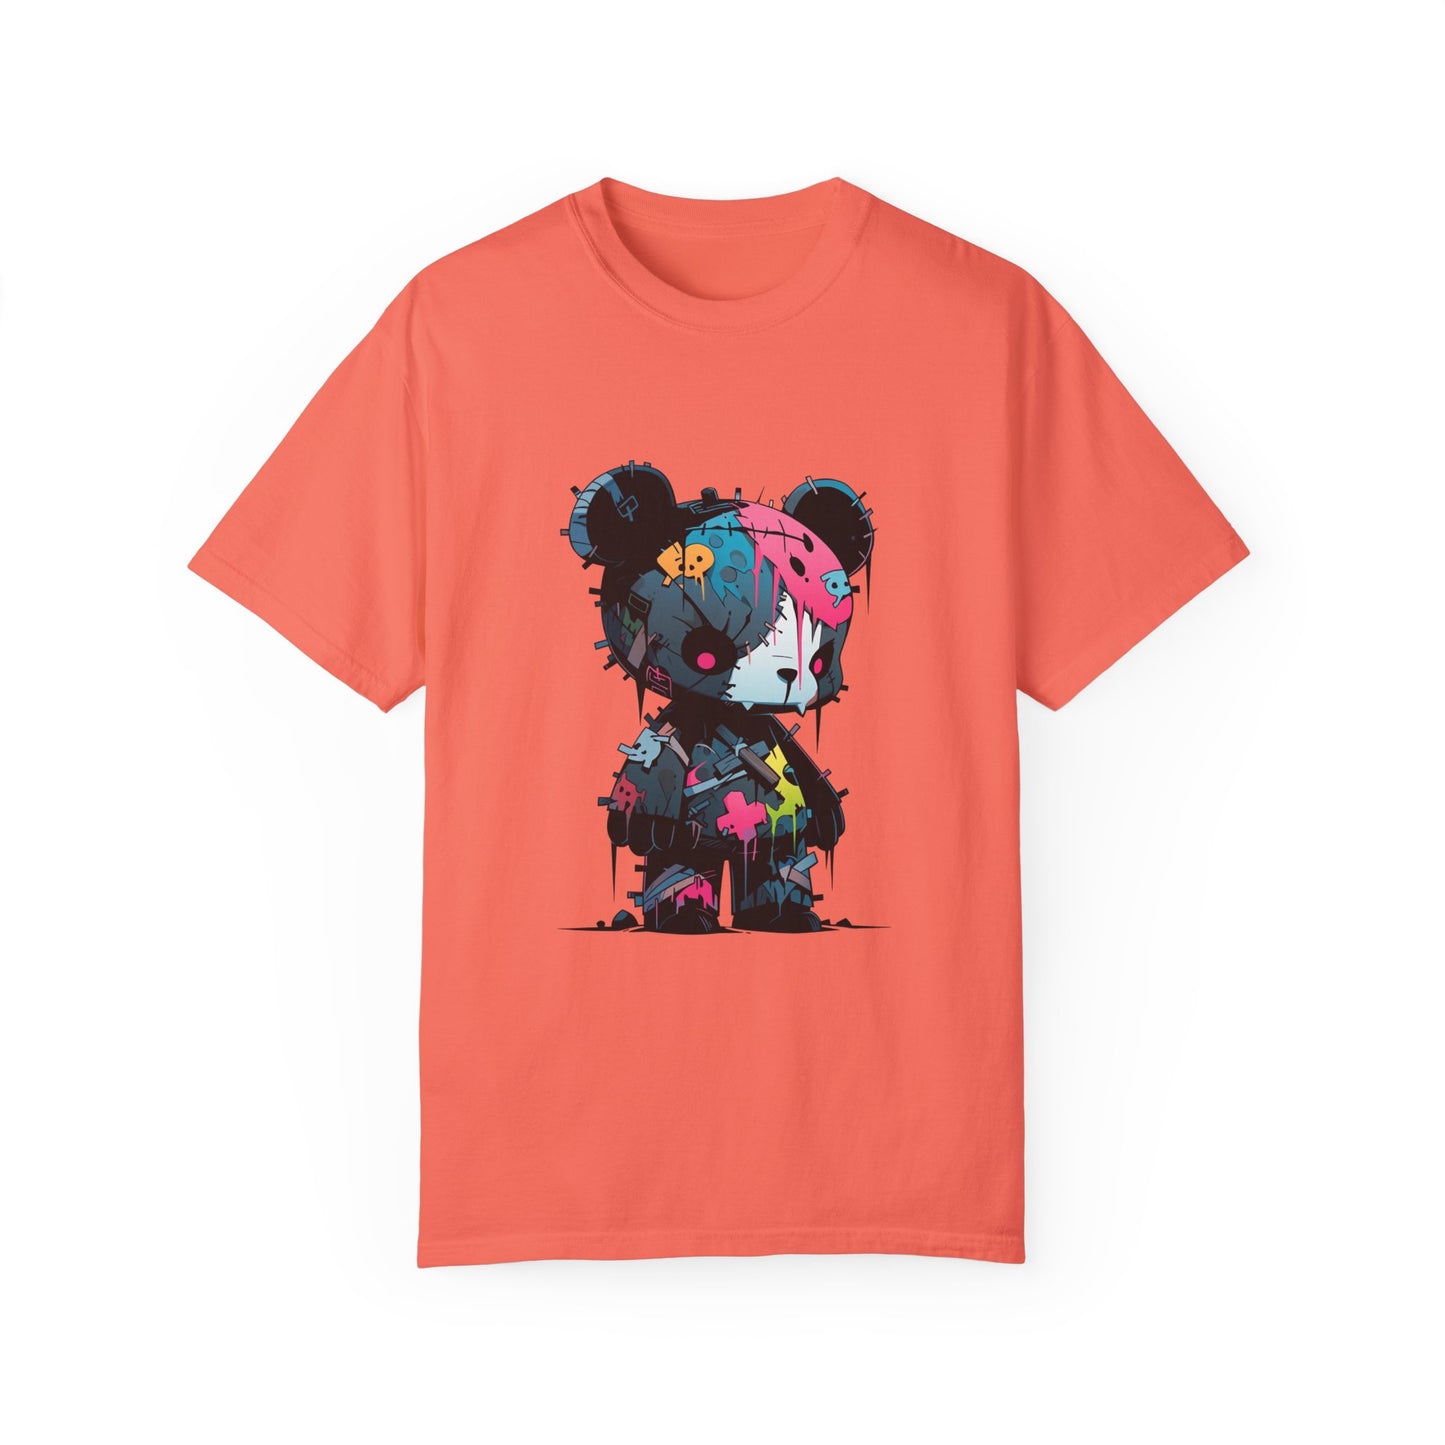 Hip Hop Teddy Bear Graphic Unisex Garment-dyed T-shirt Cotton Funny Humorous Graphic Soft Premium Unisex Men Women Bright Salmon T-shirt Birthday Gift-6